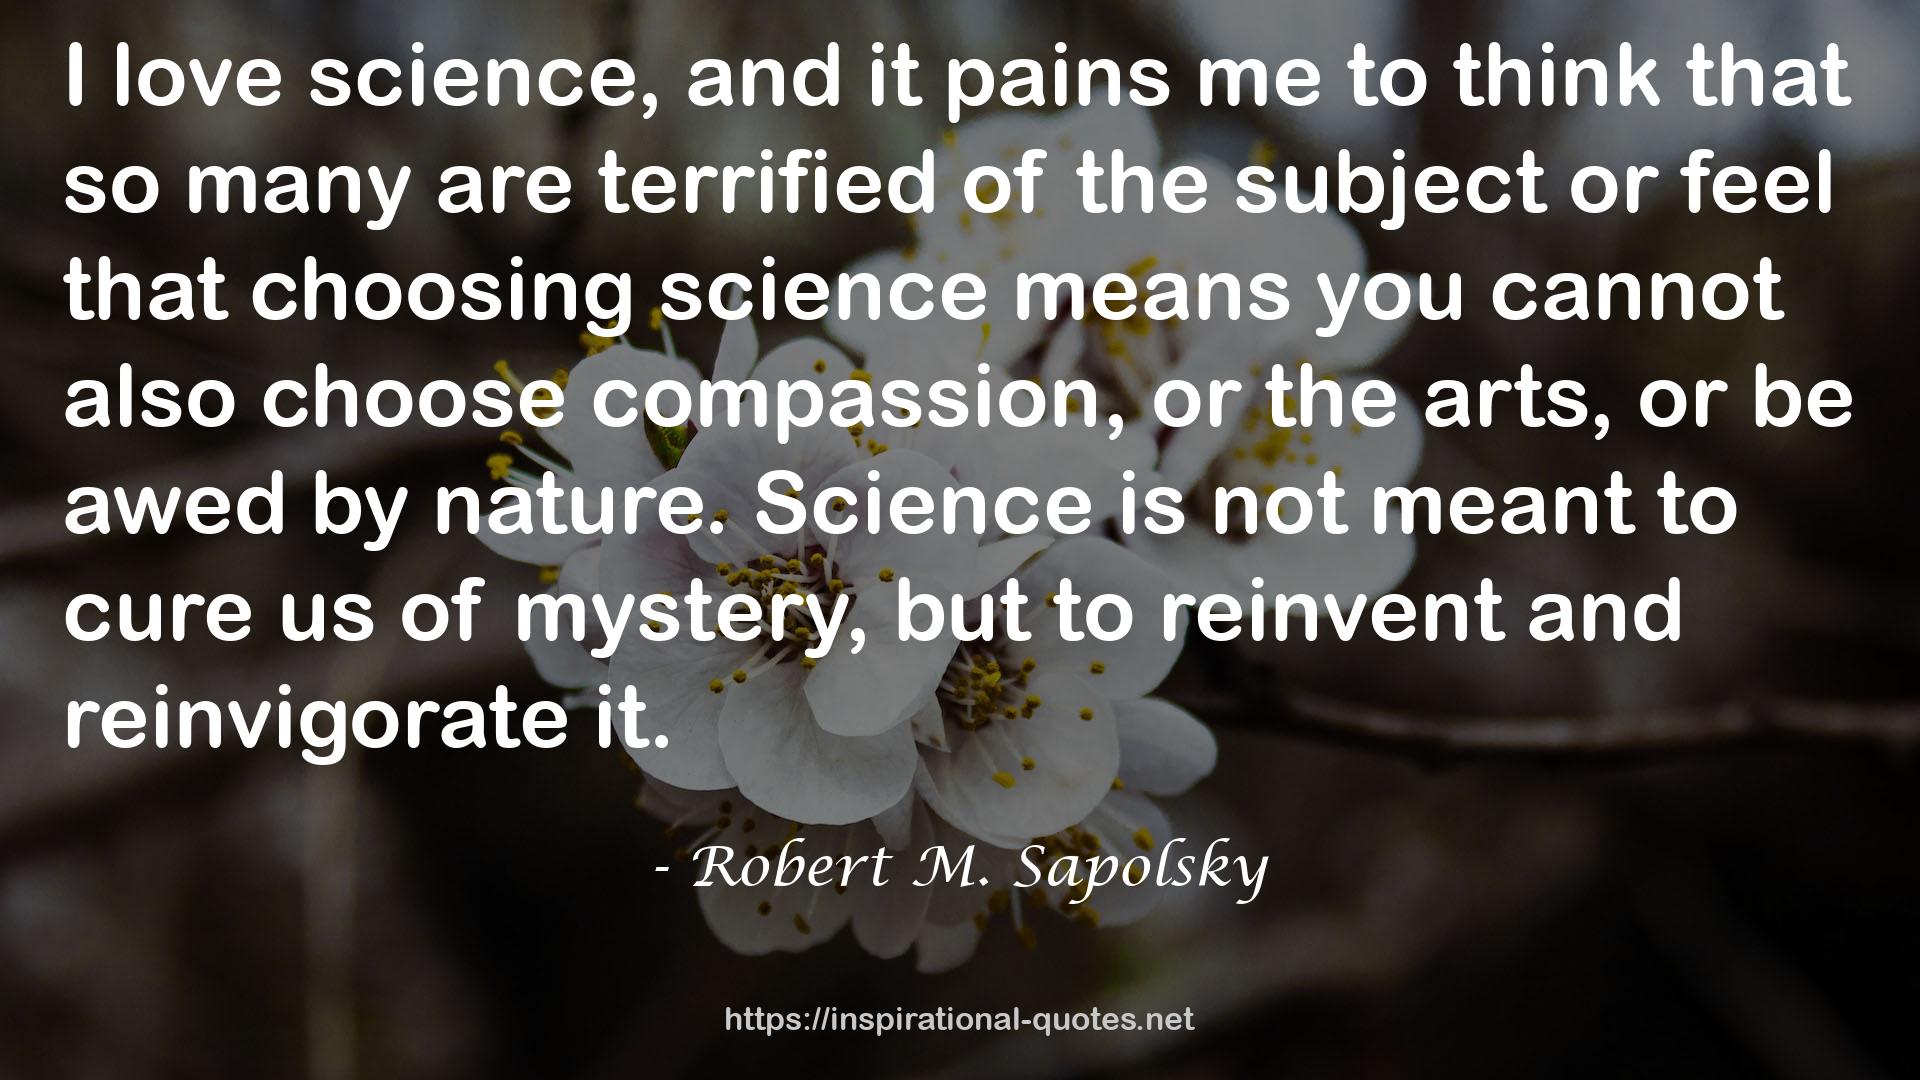 Robert M. Sapolsky QUOTES